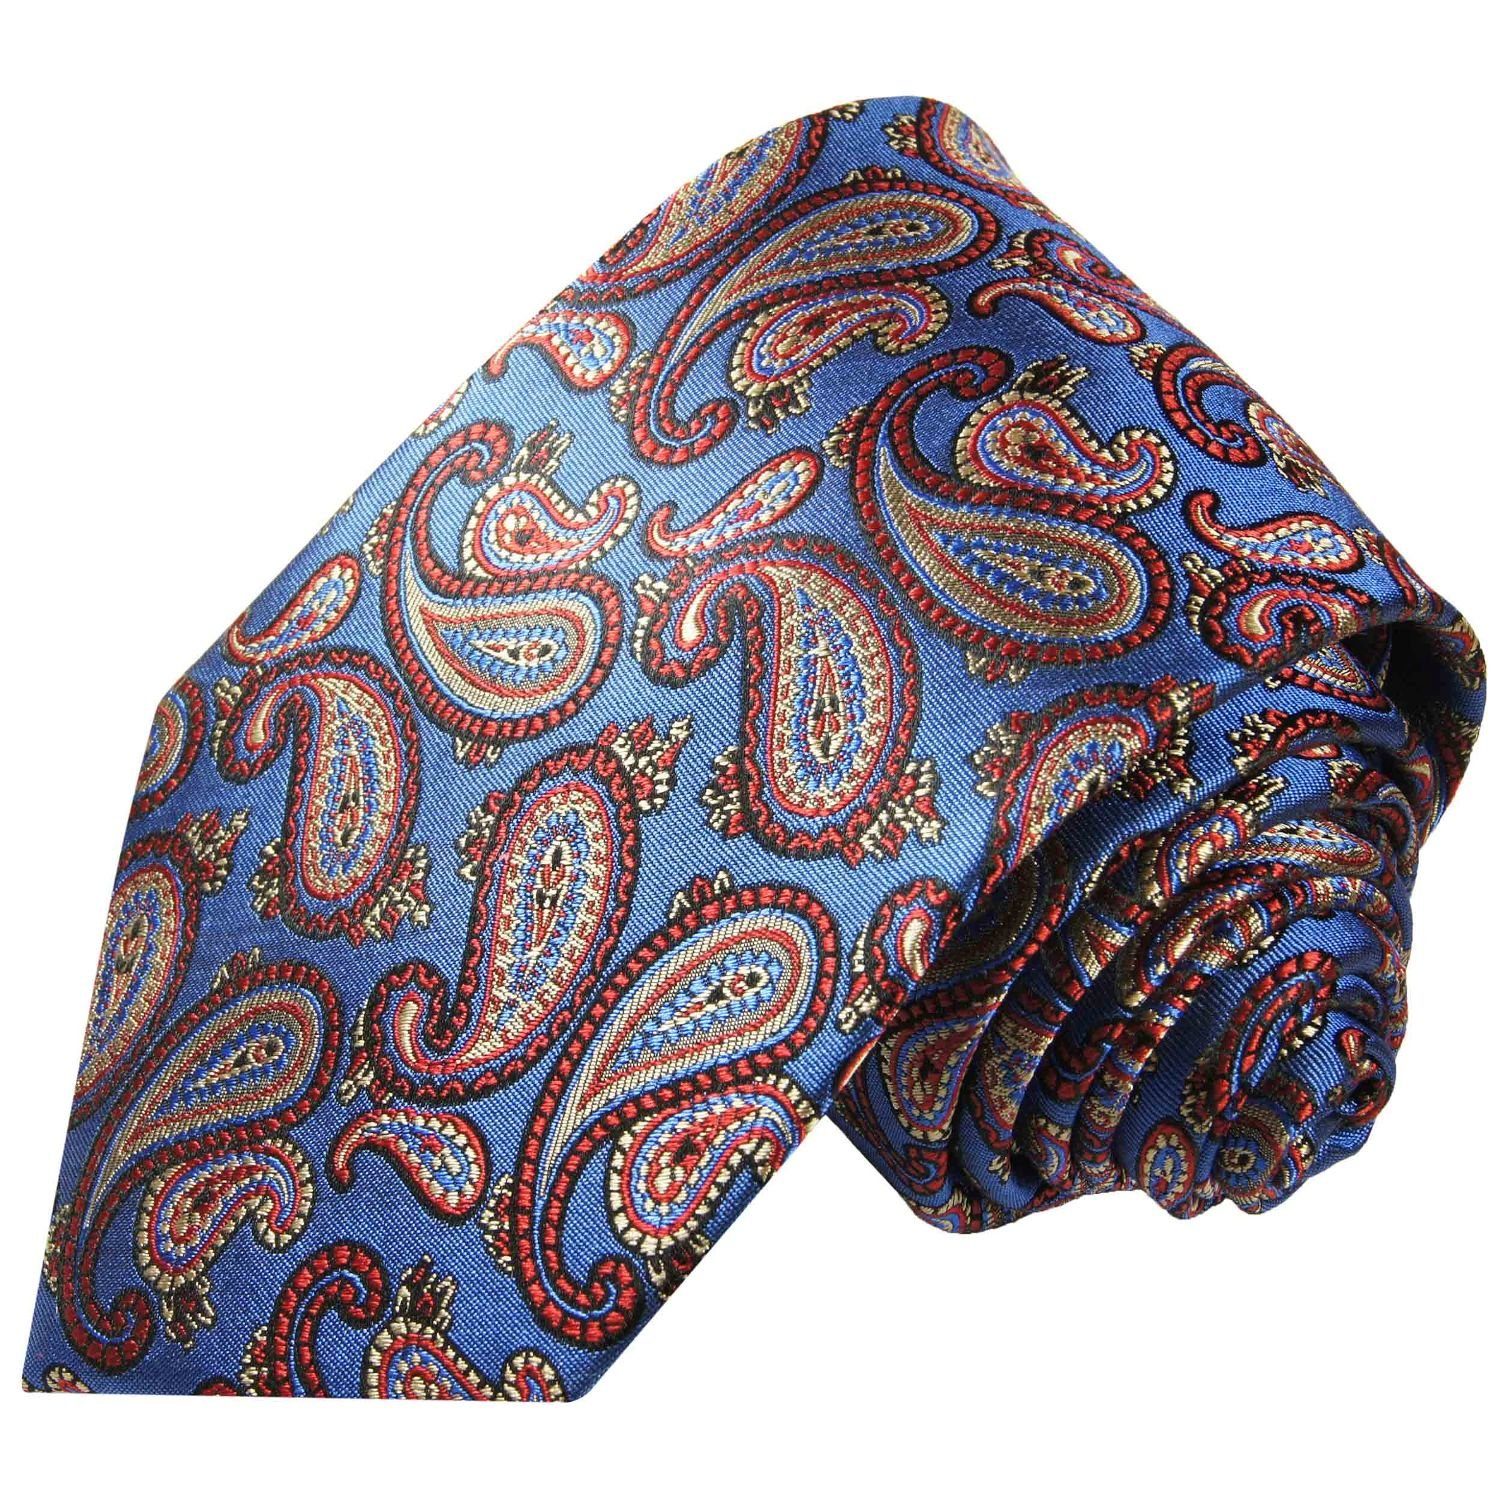 Paul Malone Krawatte »Elegante Seidenkrawatte Herren Schlips modern paisley  brokat 100% Seide« Schmal (6cm), blau rot 361 online kaufen | OTTO